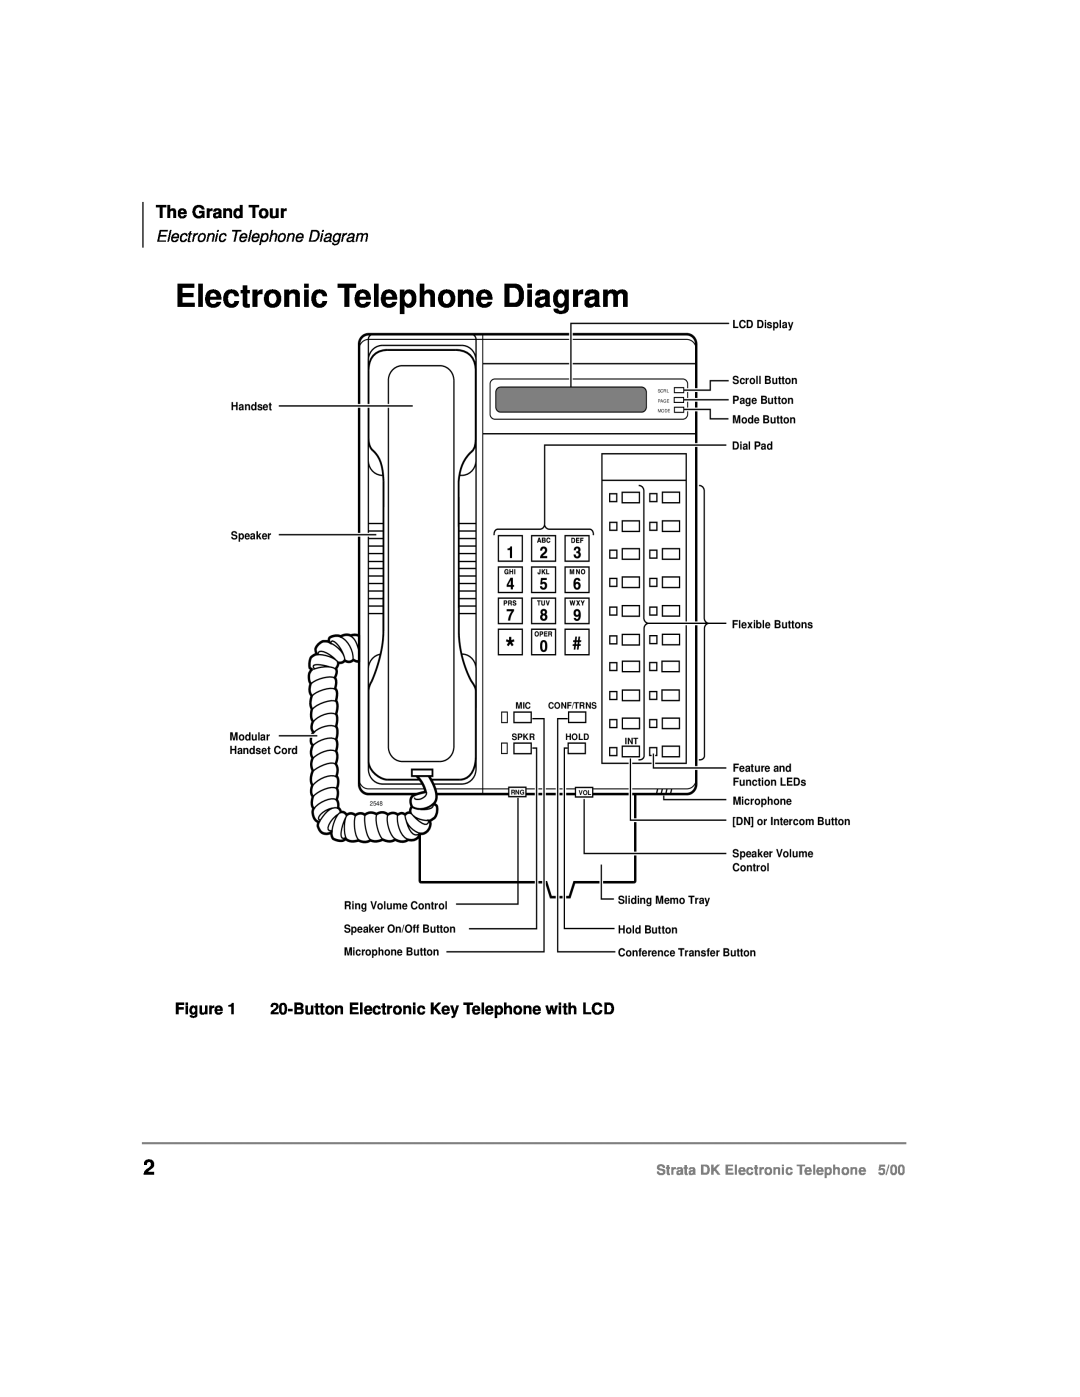 Toshiba manual Electronic Telephone Diagram, The Grand Tour, Strata DK Electronic Telephone 5/00 